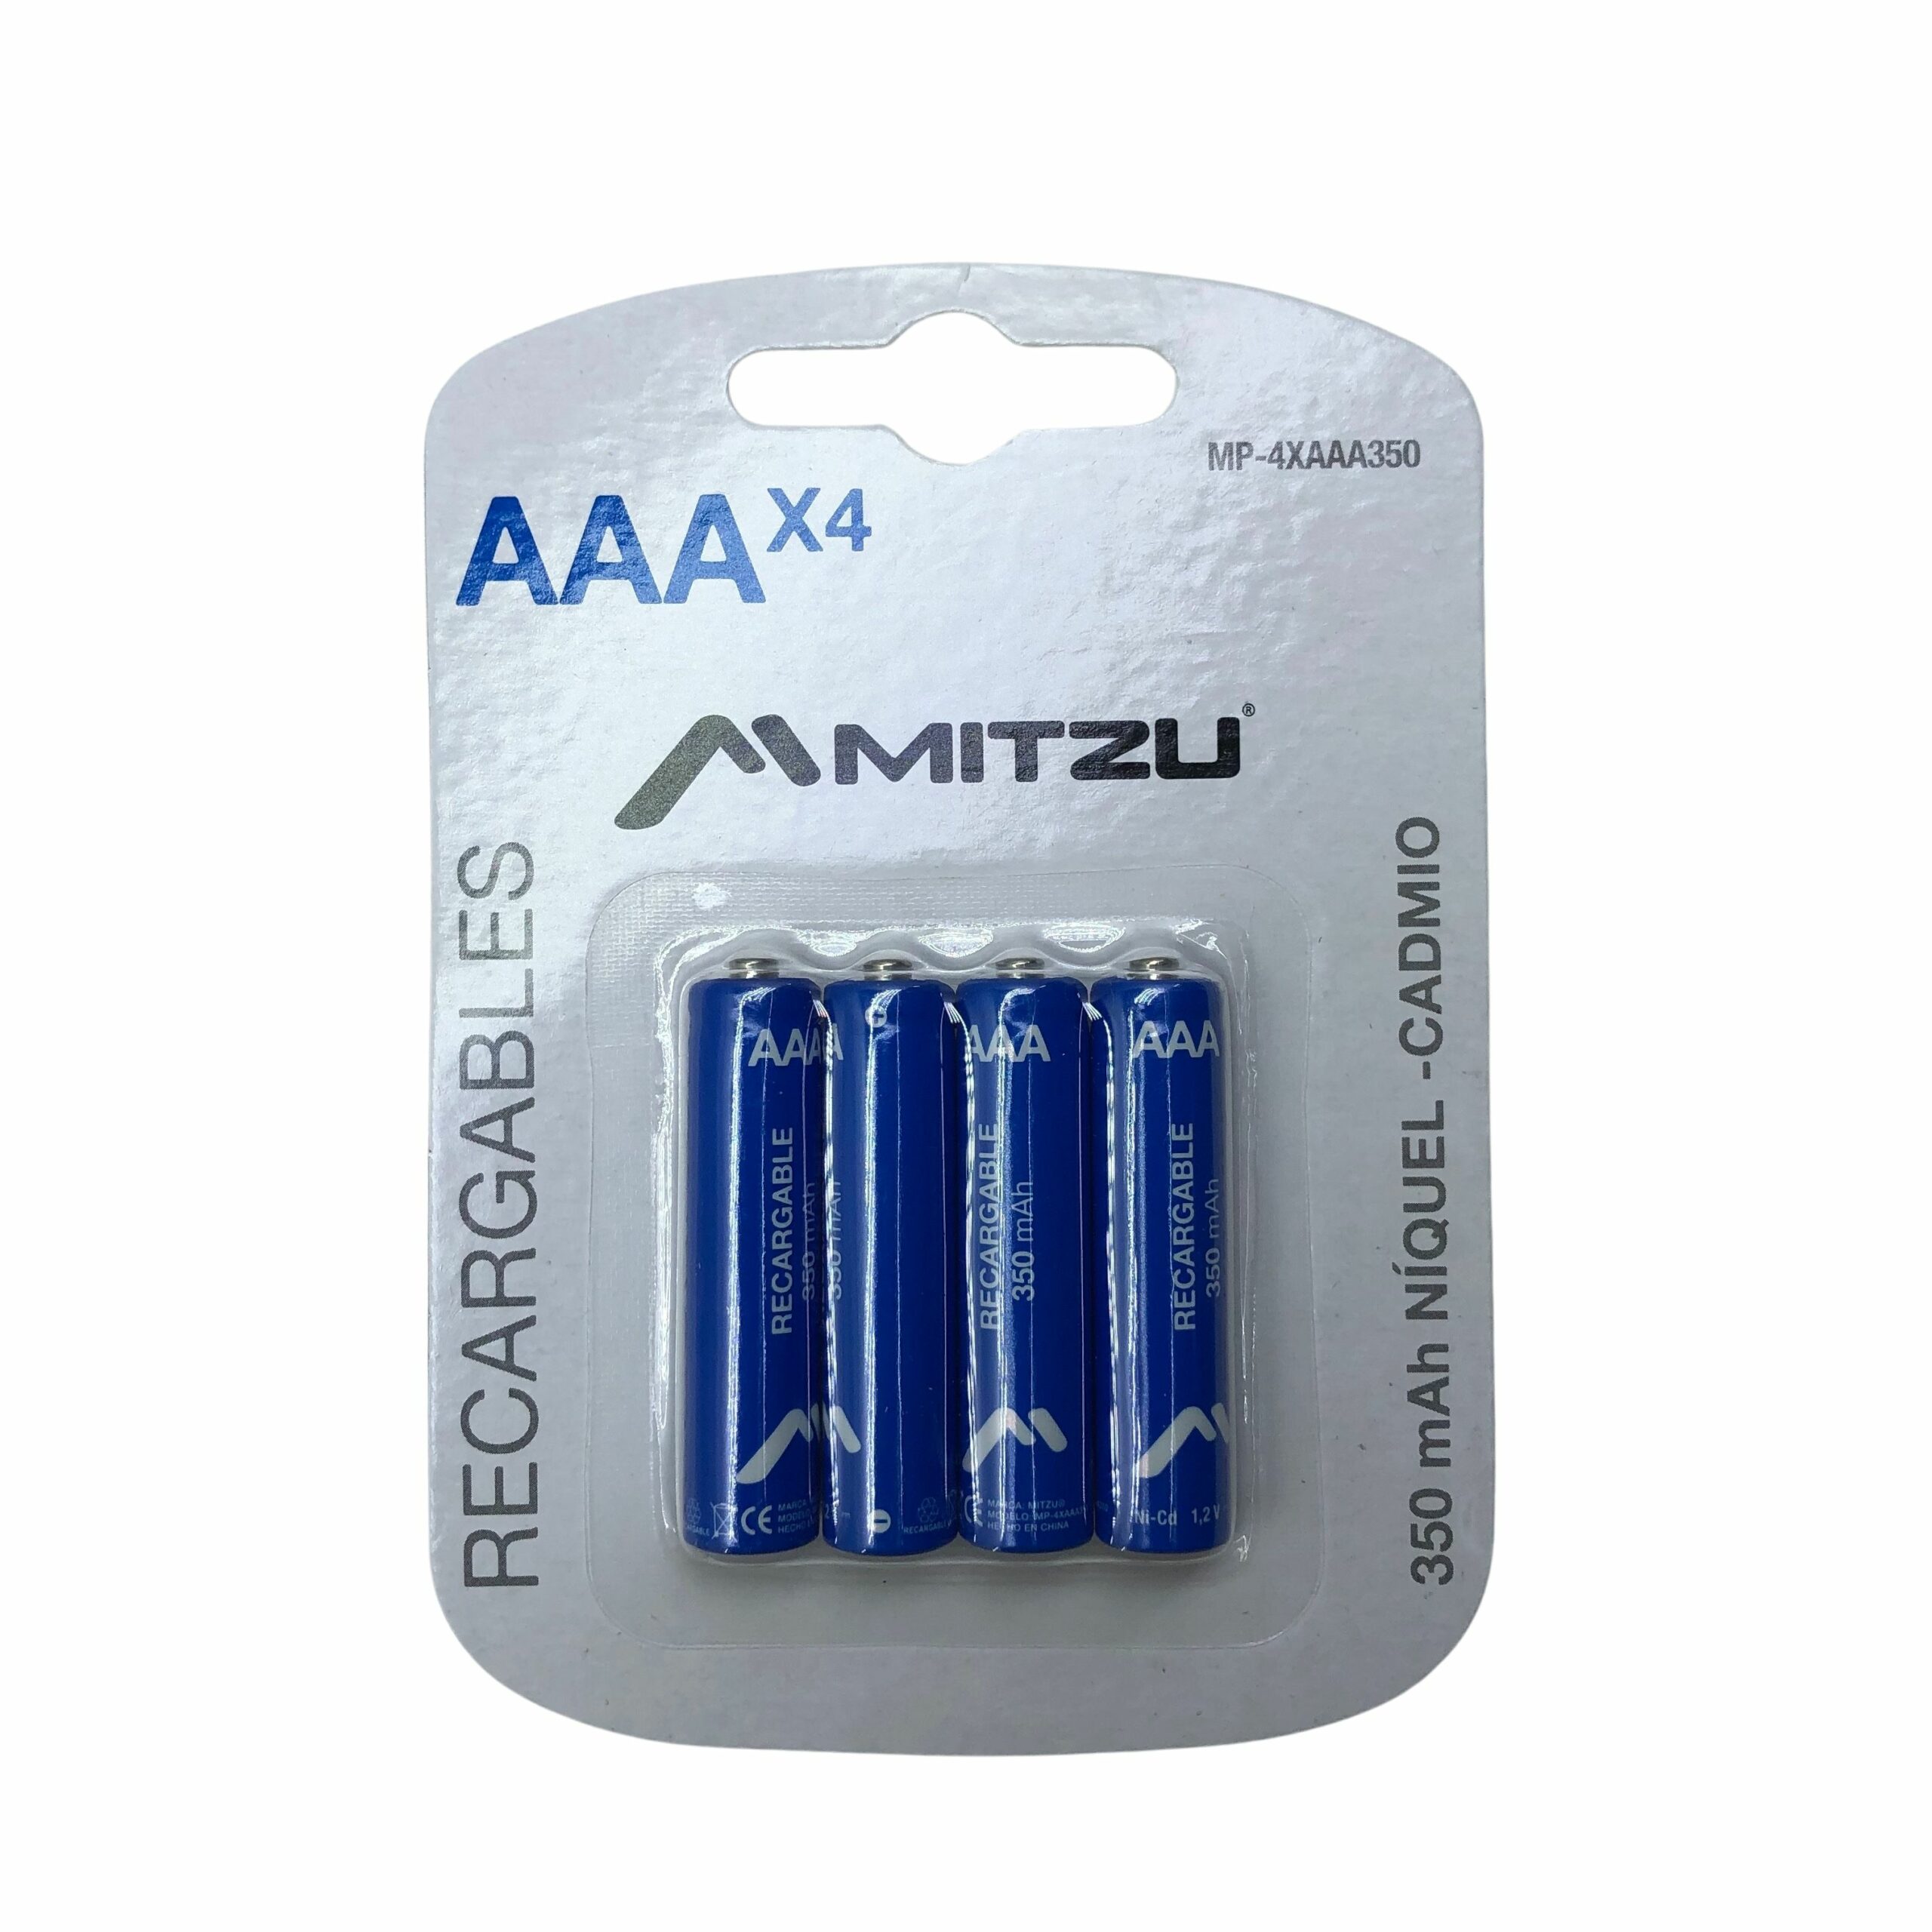 Mitzu® Paquete de 4 pilas recargables AAA Níquel-Cadmio 350 mAh